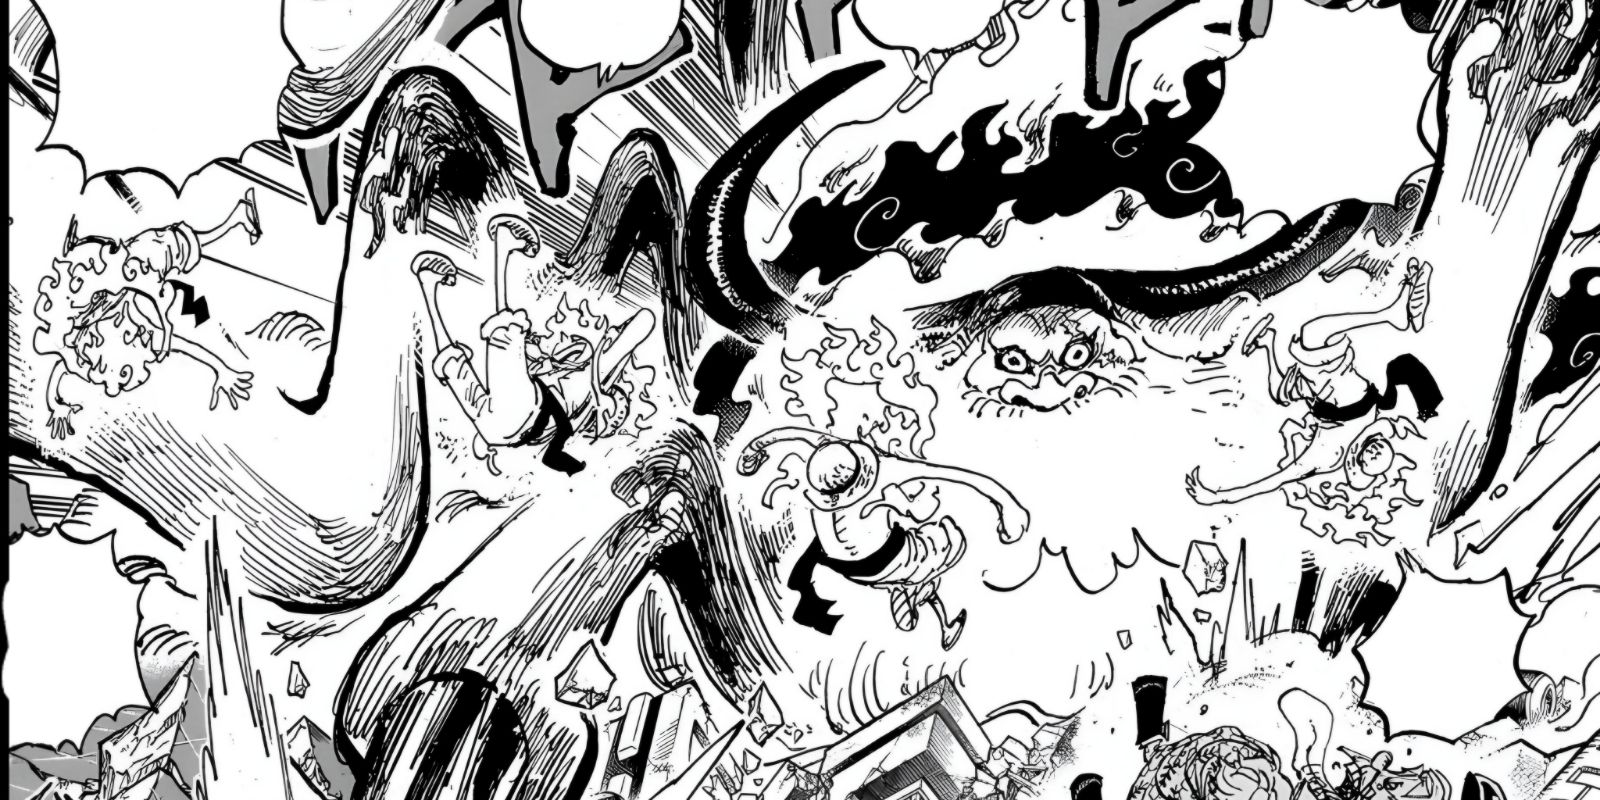 Jaygarcia Saturn from One Piece